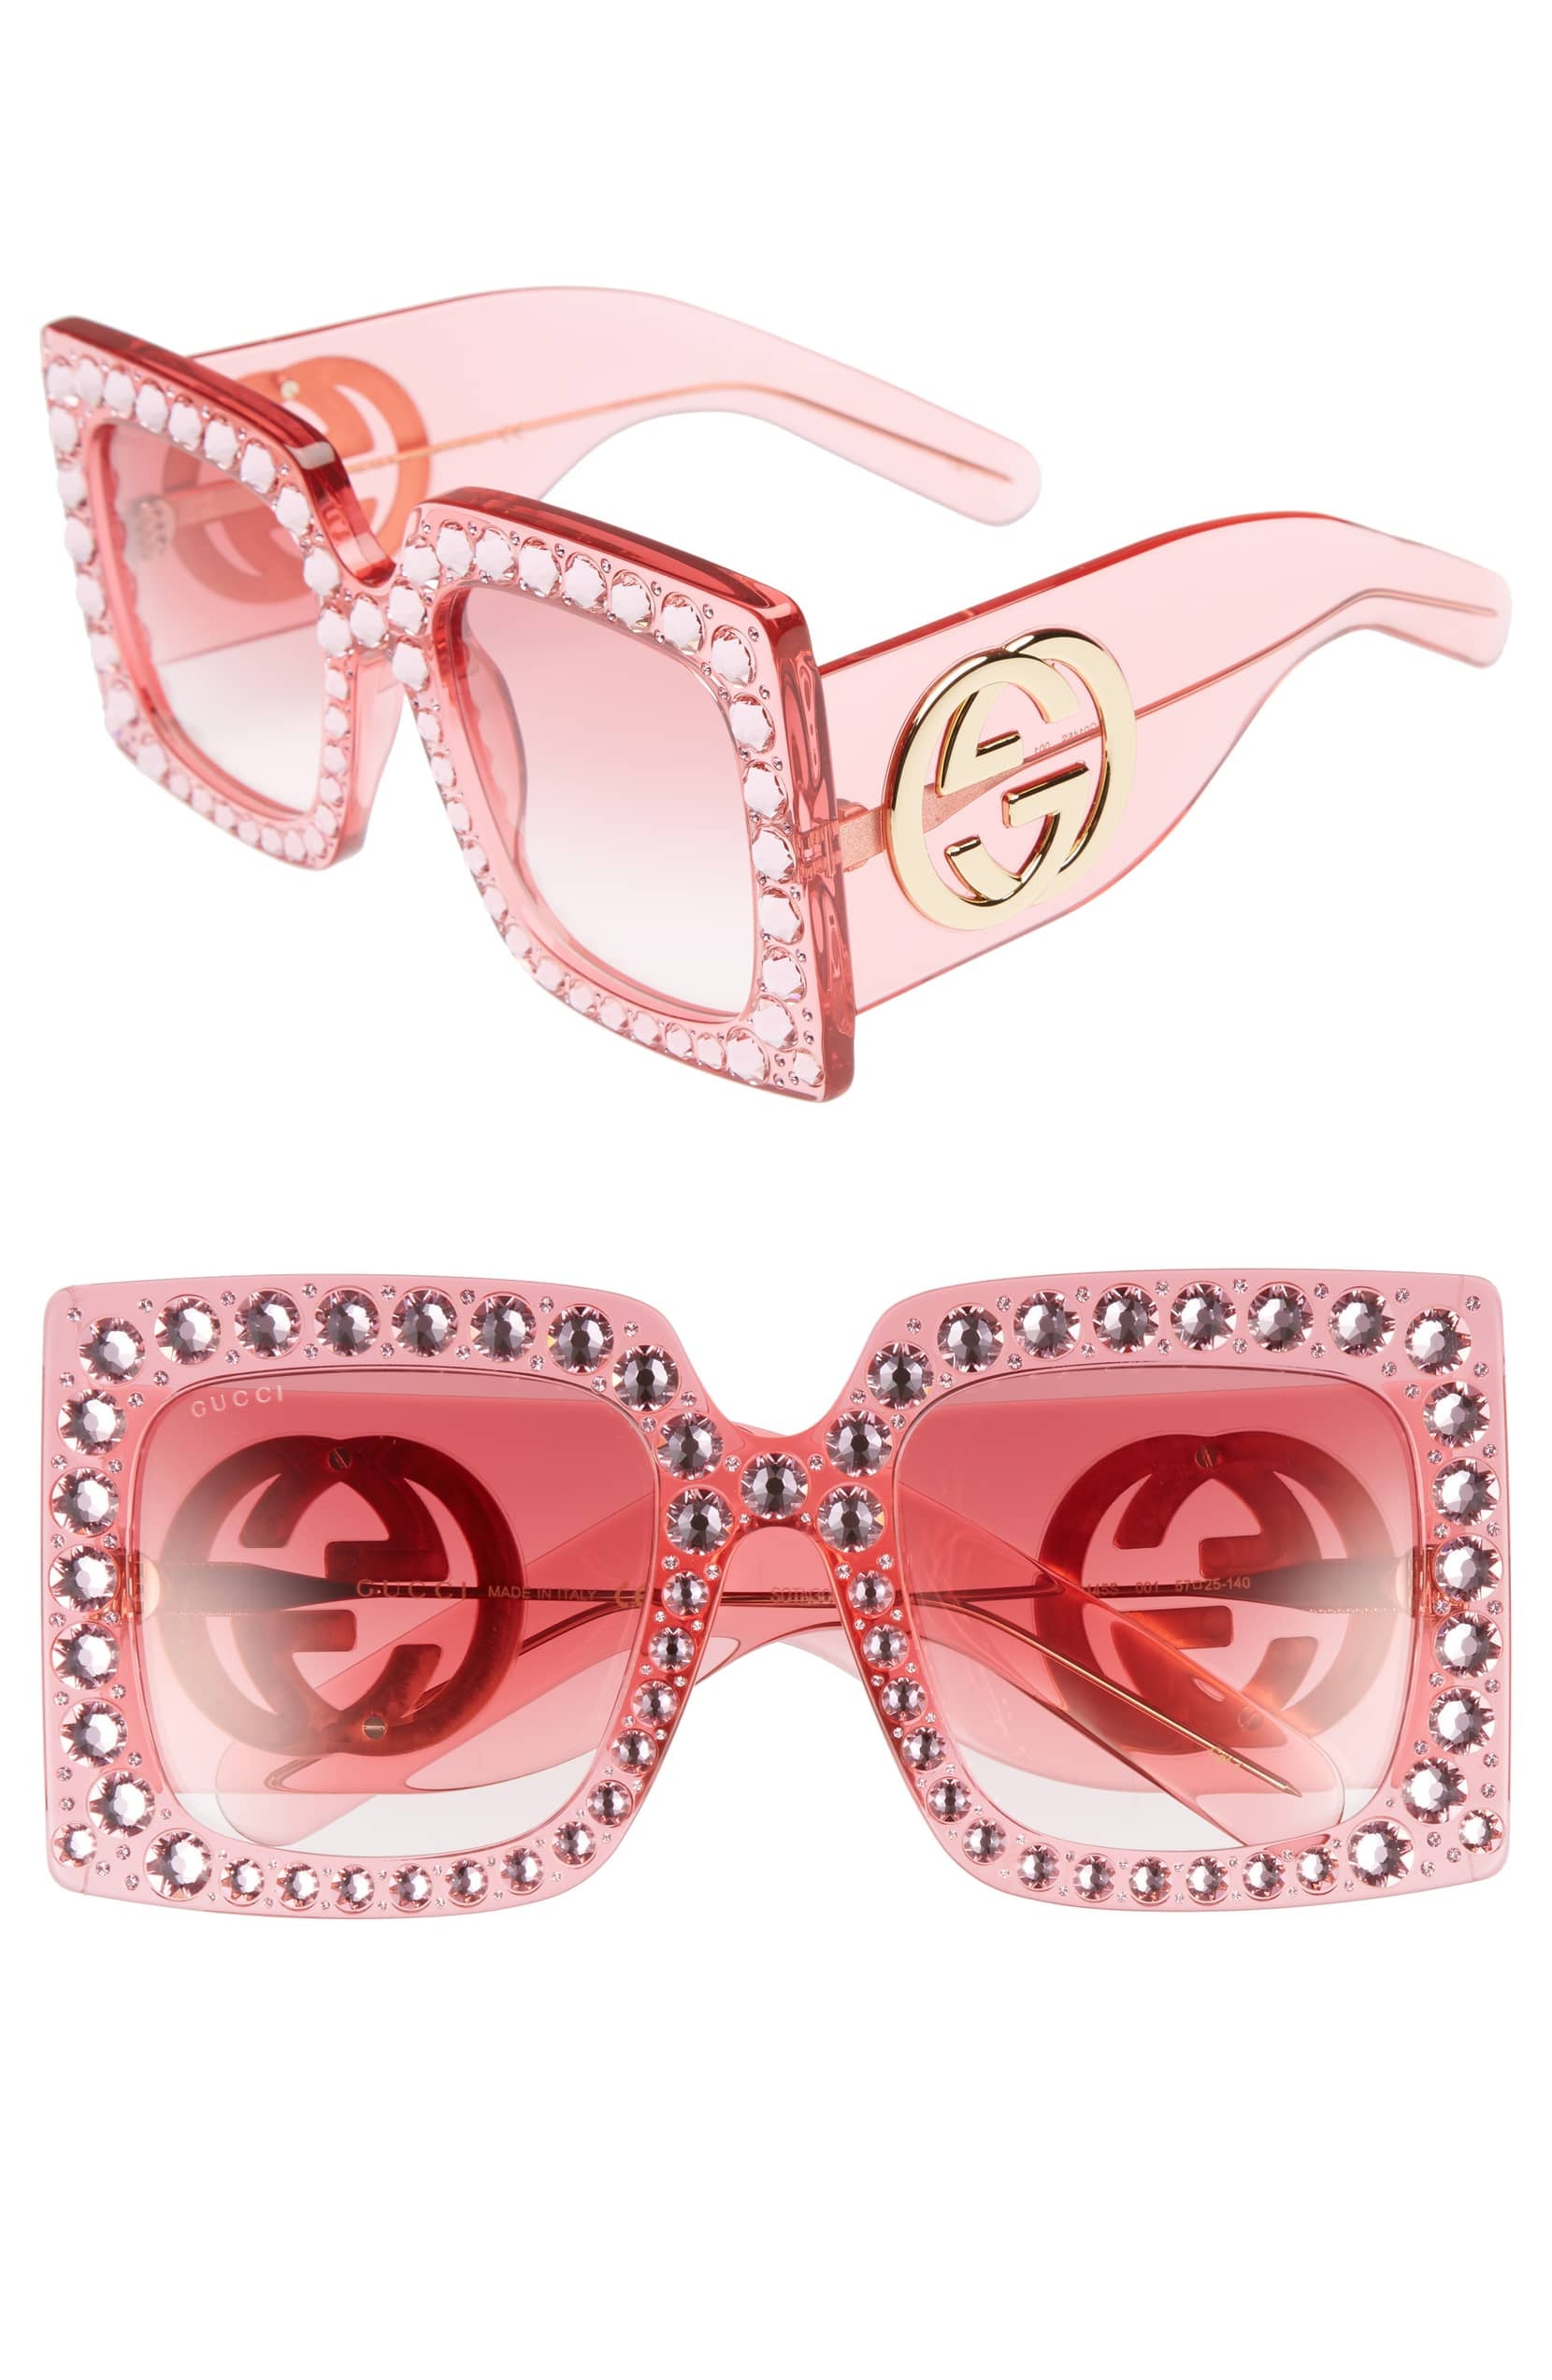 Chanel Sunglasses, Pink